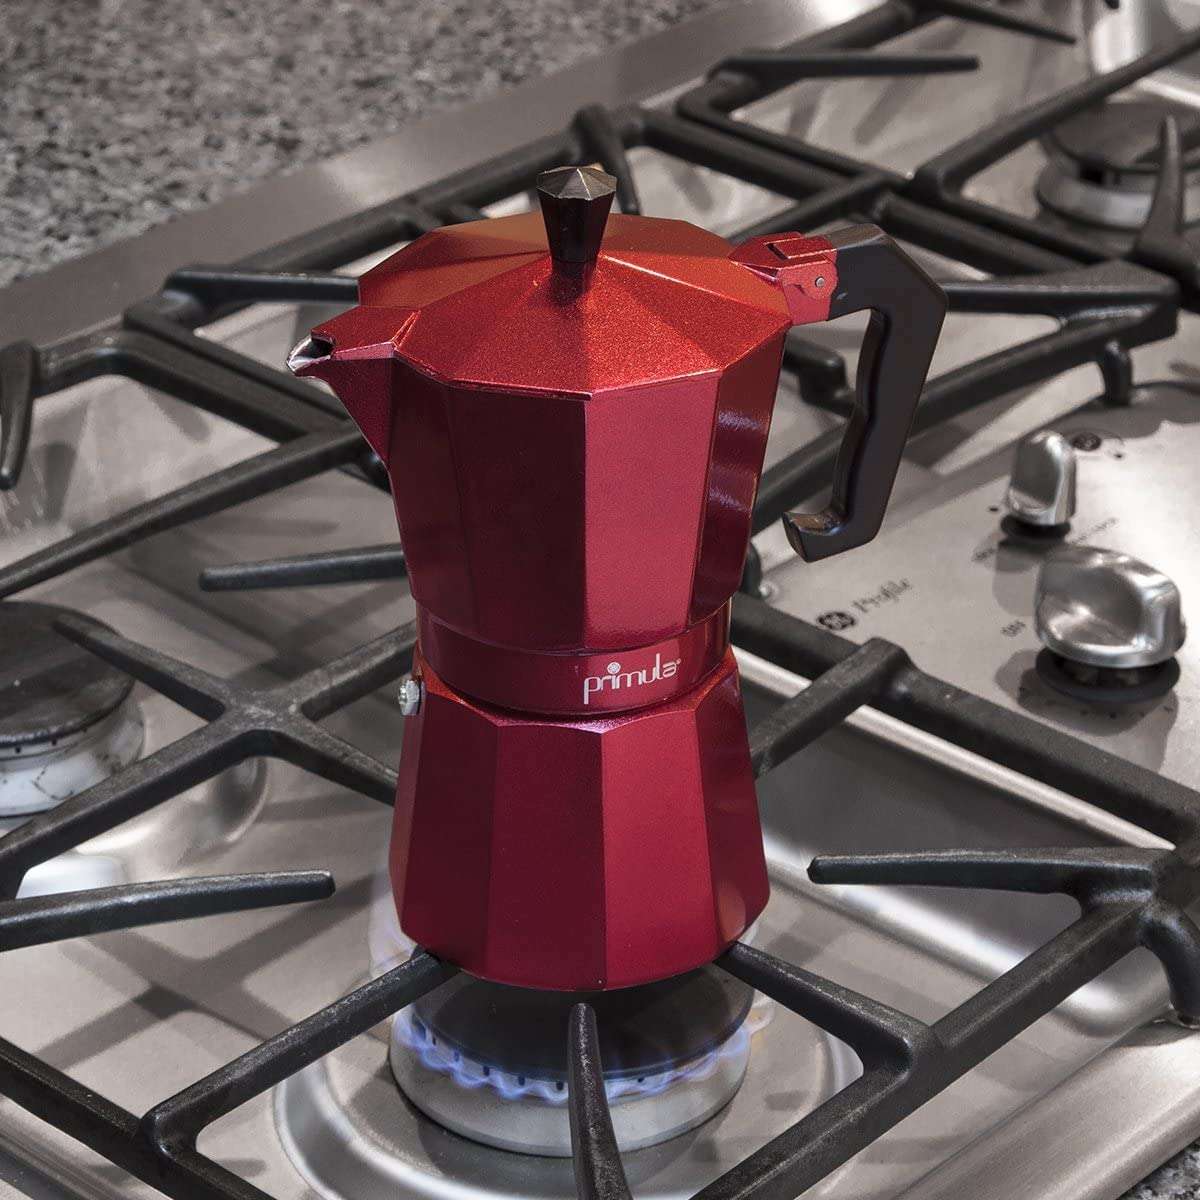 Stainless Steel Stovetop Italian Coffee Maker Espresso 12 Cup Moka Pot